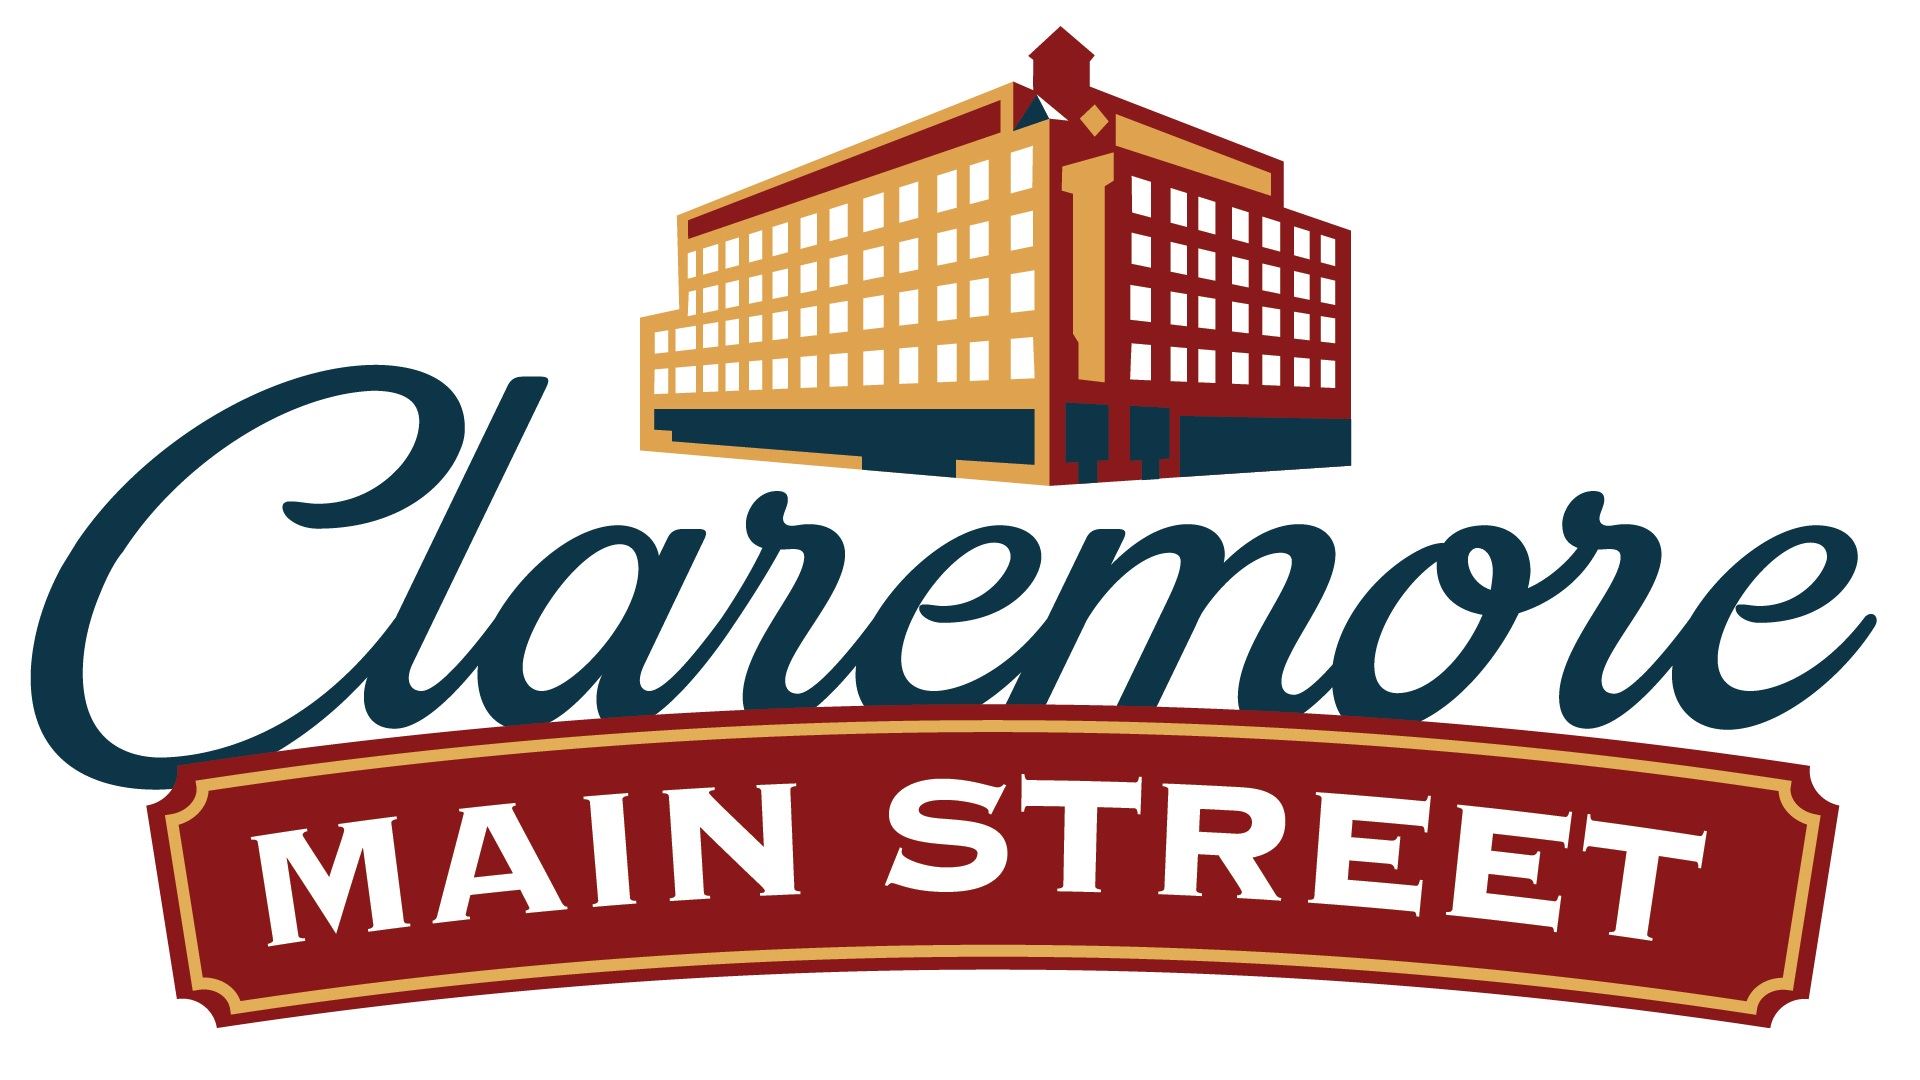 Claremore Main Street